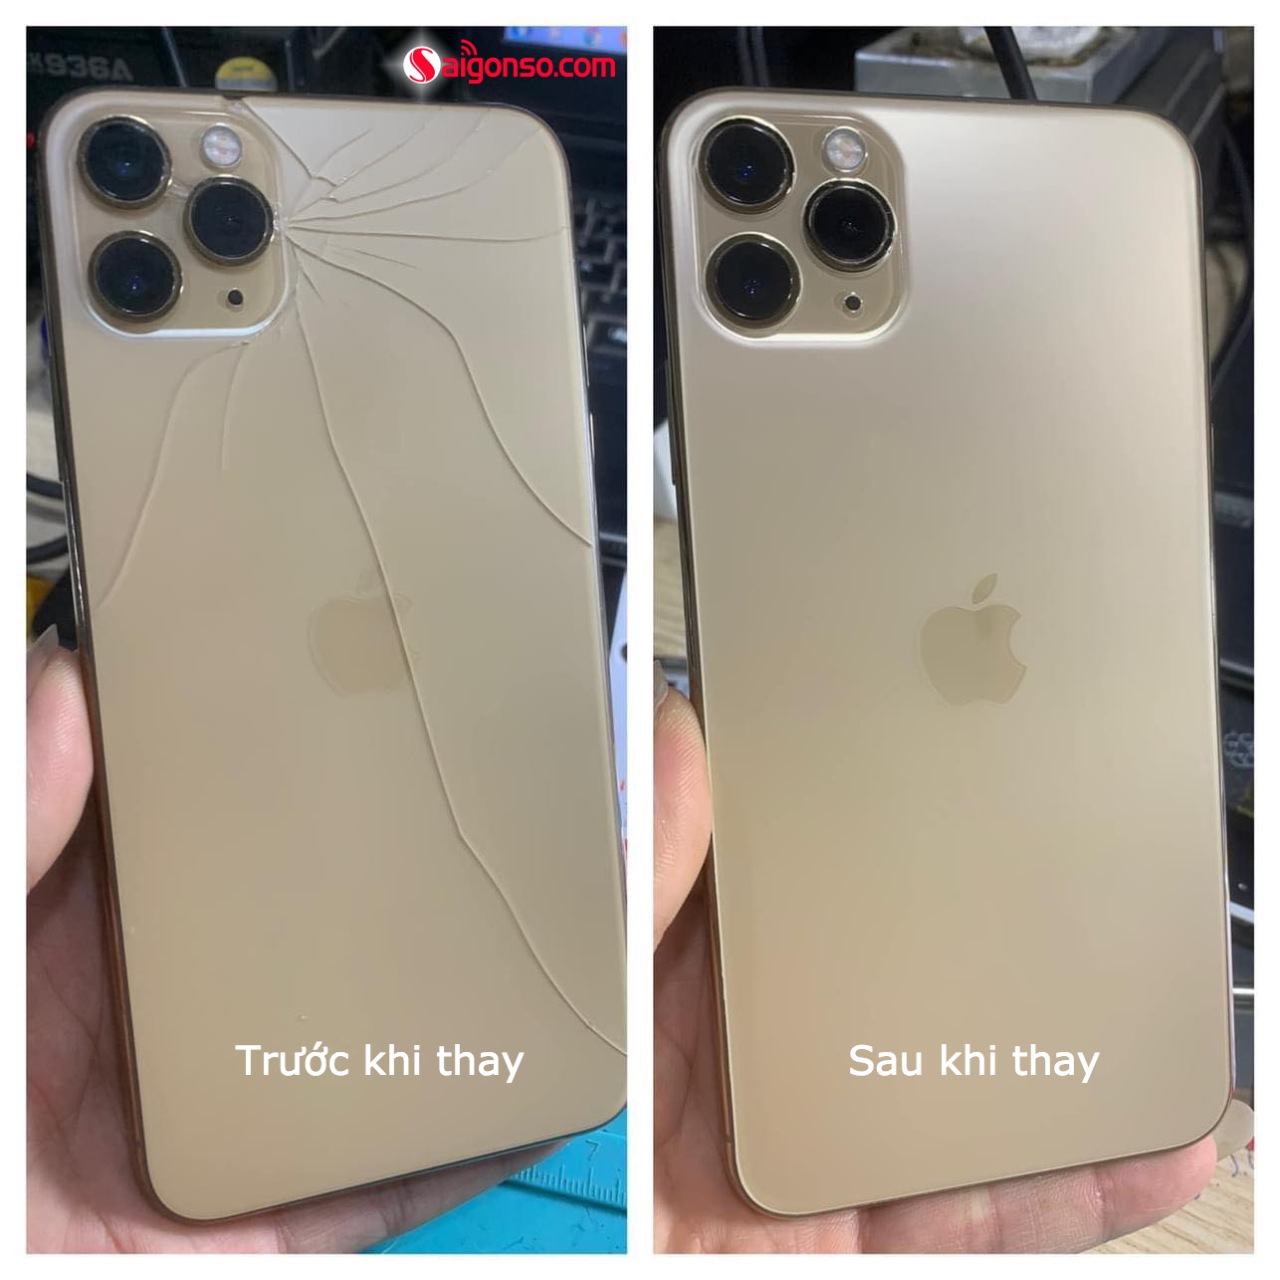 thay mặt lưng iPhone 11 Pro